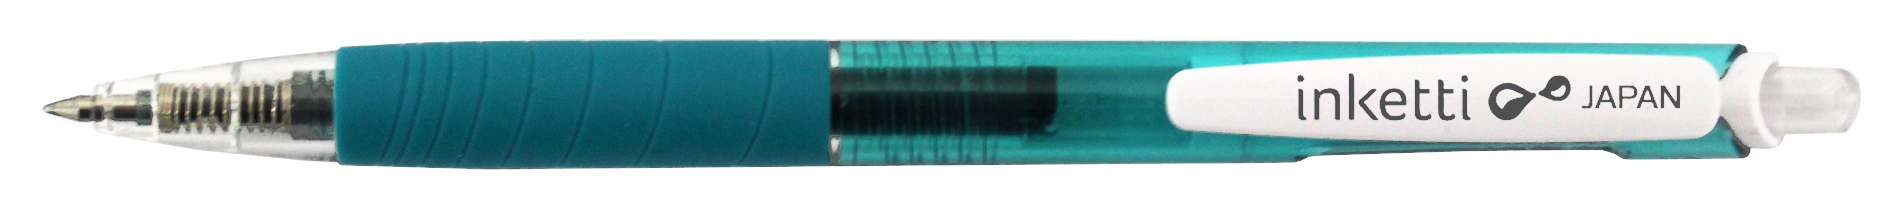 Pix cu gel Penac Inketti, rubber grip, 0.5mm, corp turcoaz transparent - scriere turcoaz